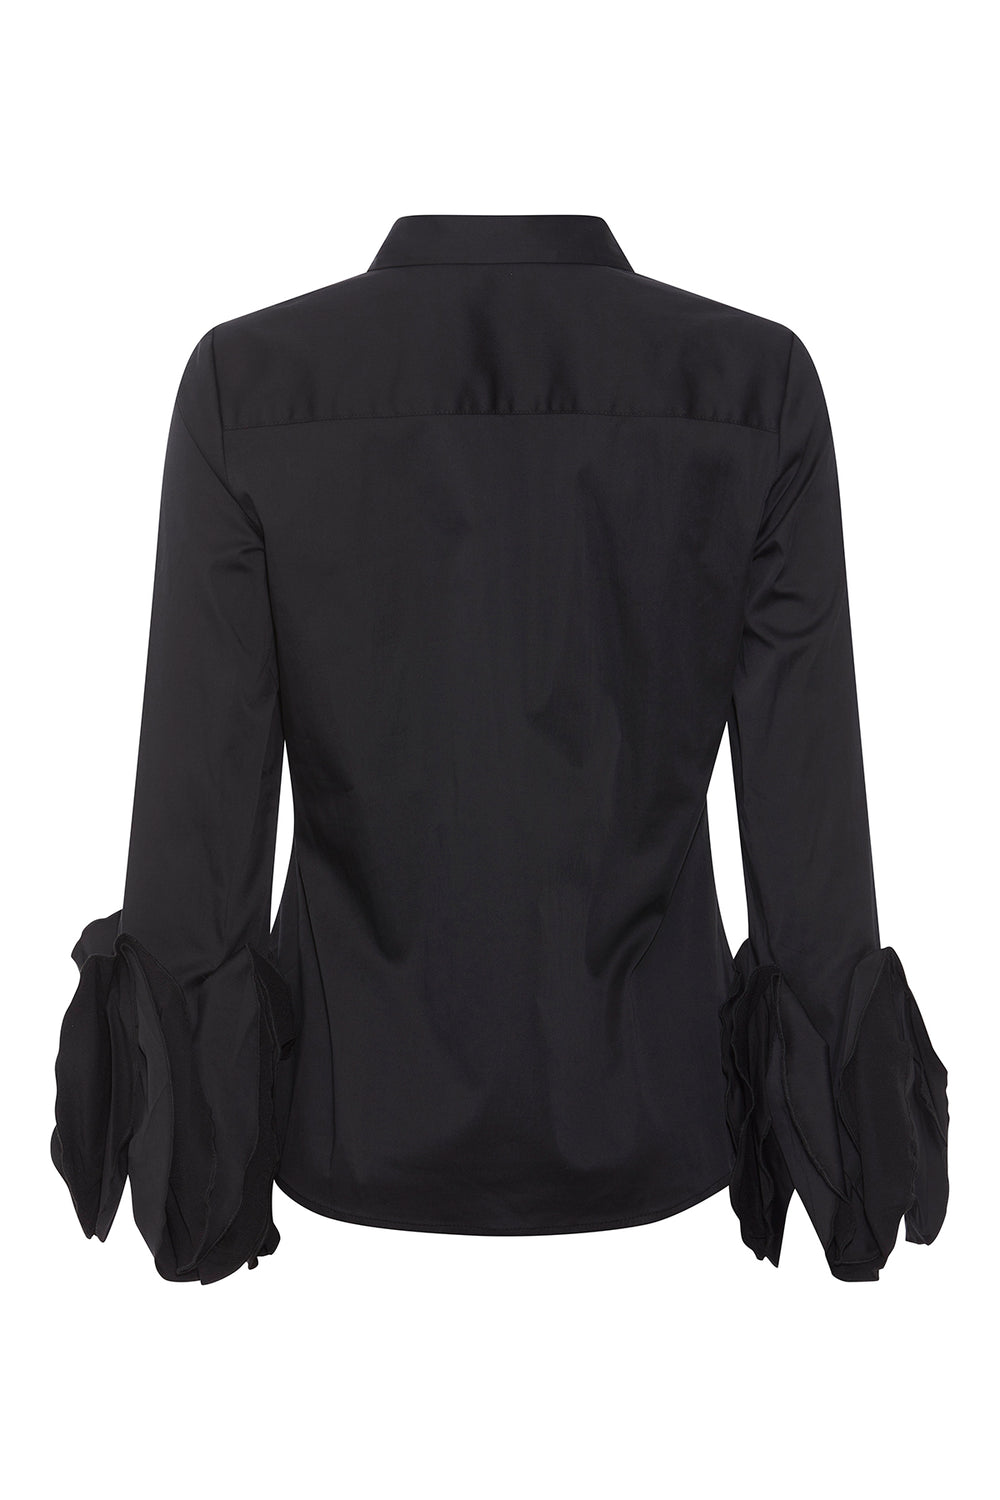 PBO Minra shirt SHIRTS 20 Black